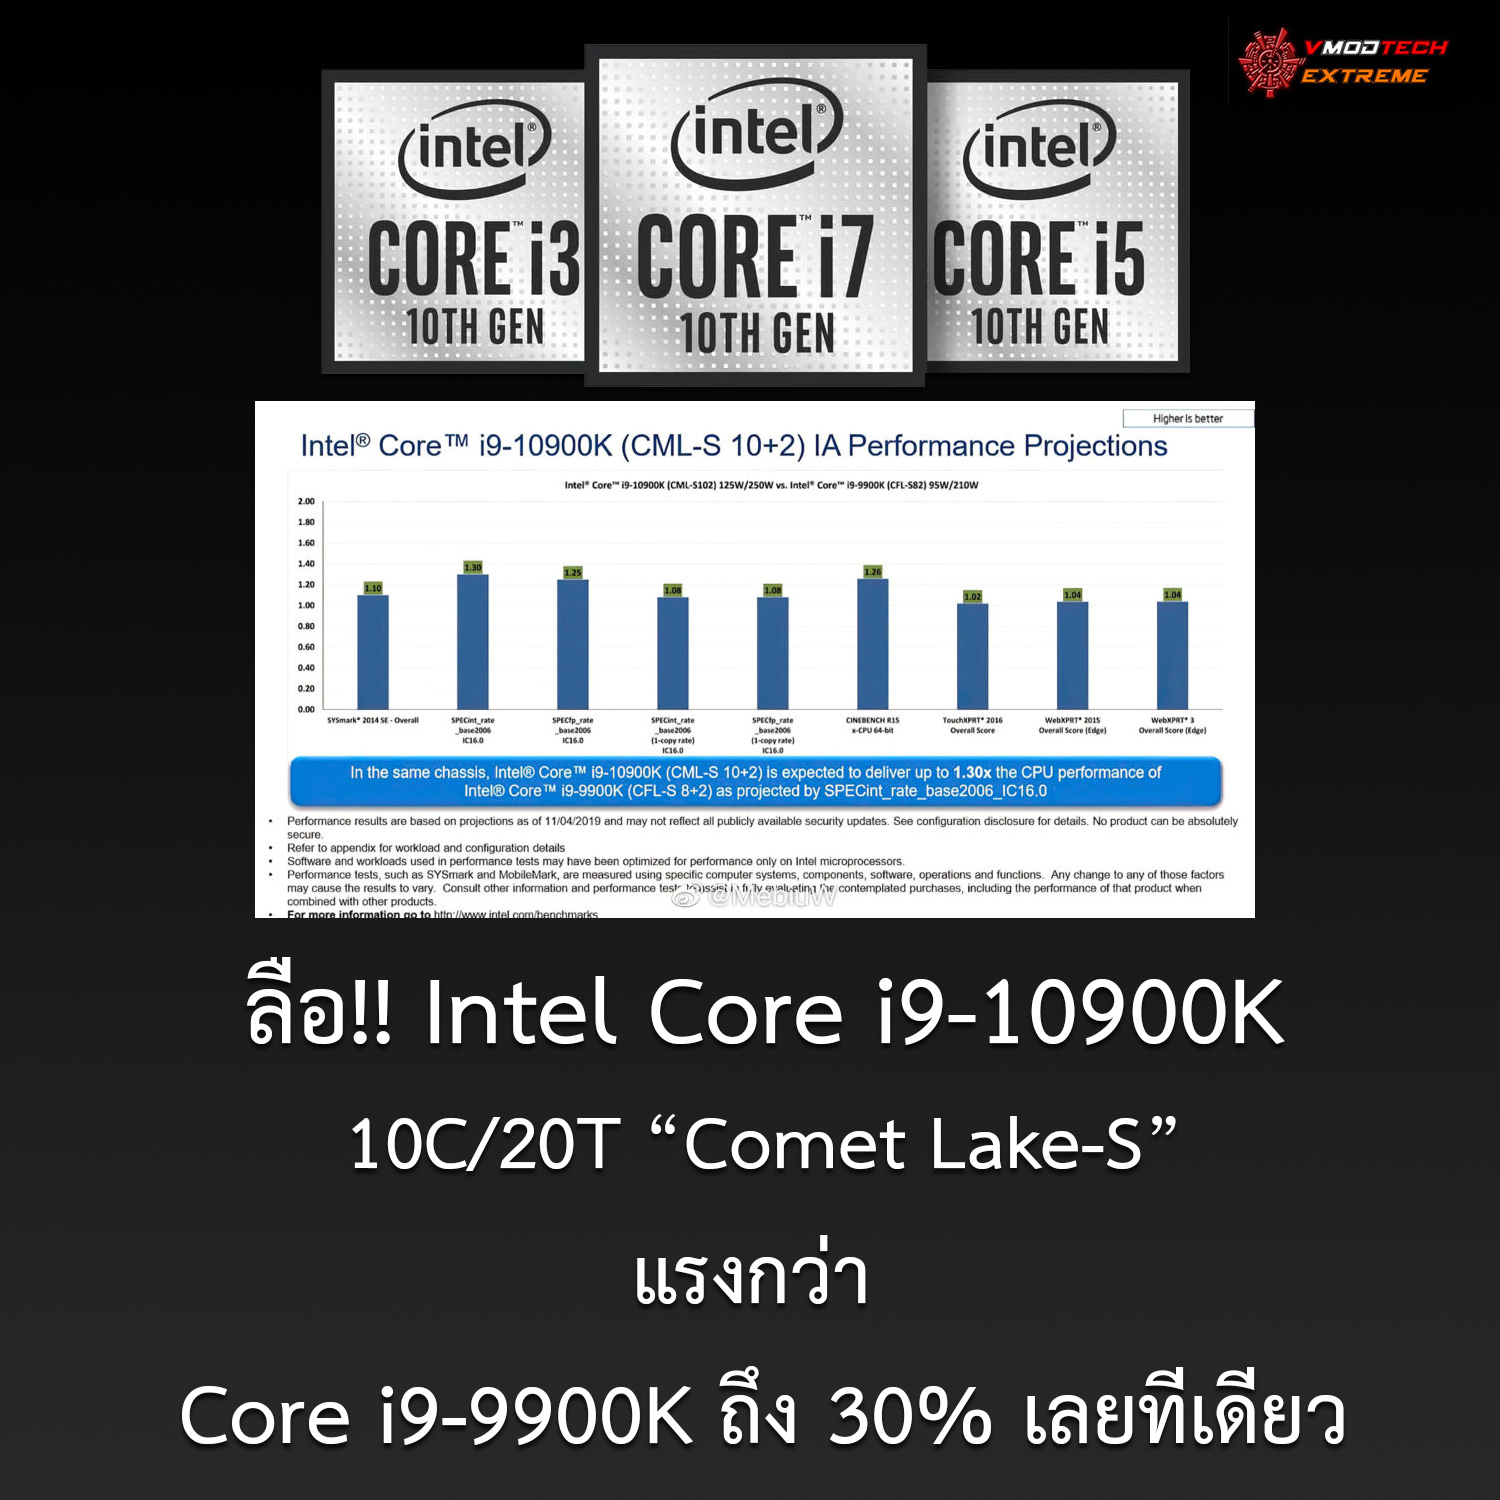 comet lake s core i9 10900k 30per1 ลือ!! Intel Core i9 10900K แรงกว่า Core i9 9900K ถึง 30% เลยทีเดียว